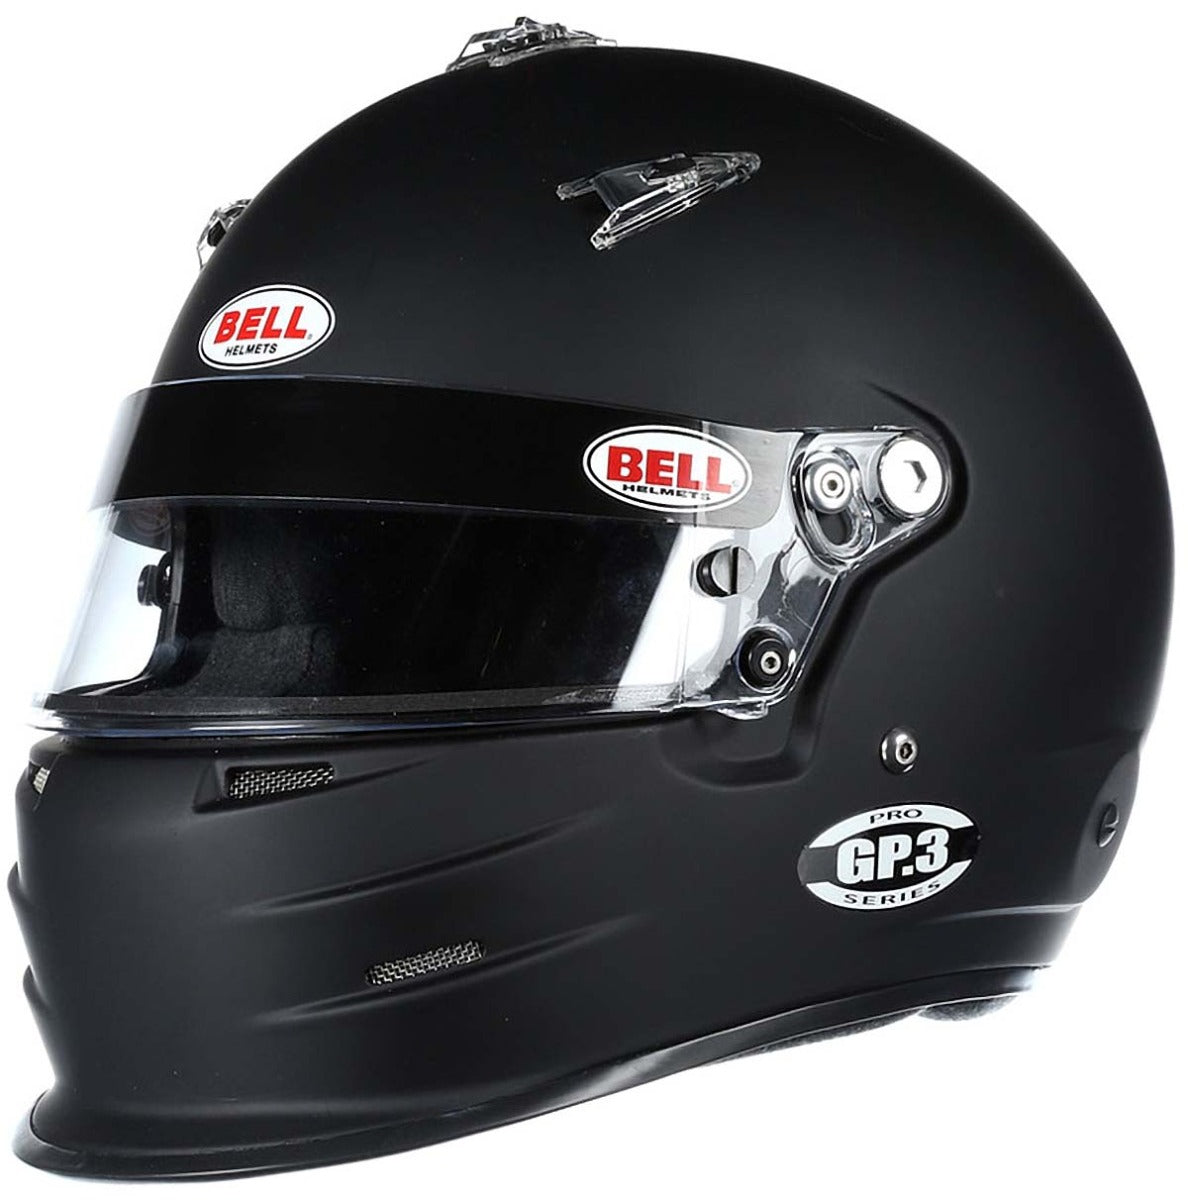 Bell GP3 Sport Helmet Black SA2020 Front View Image